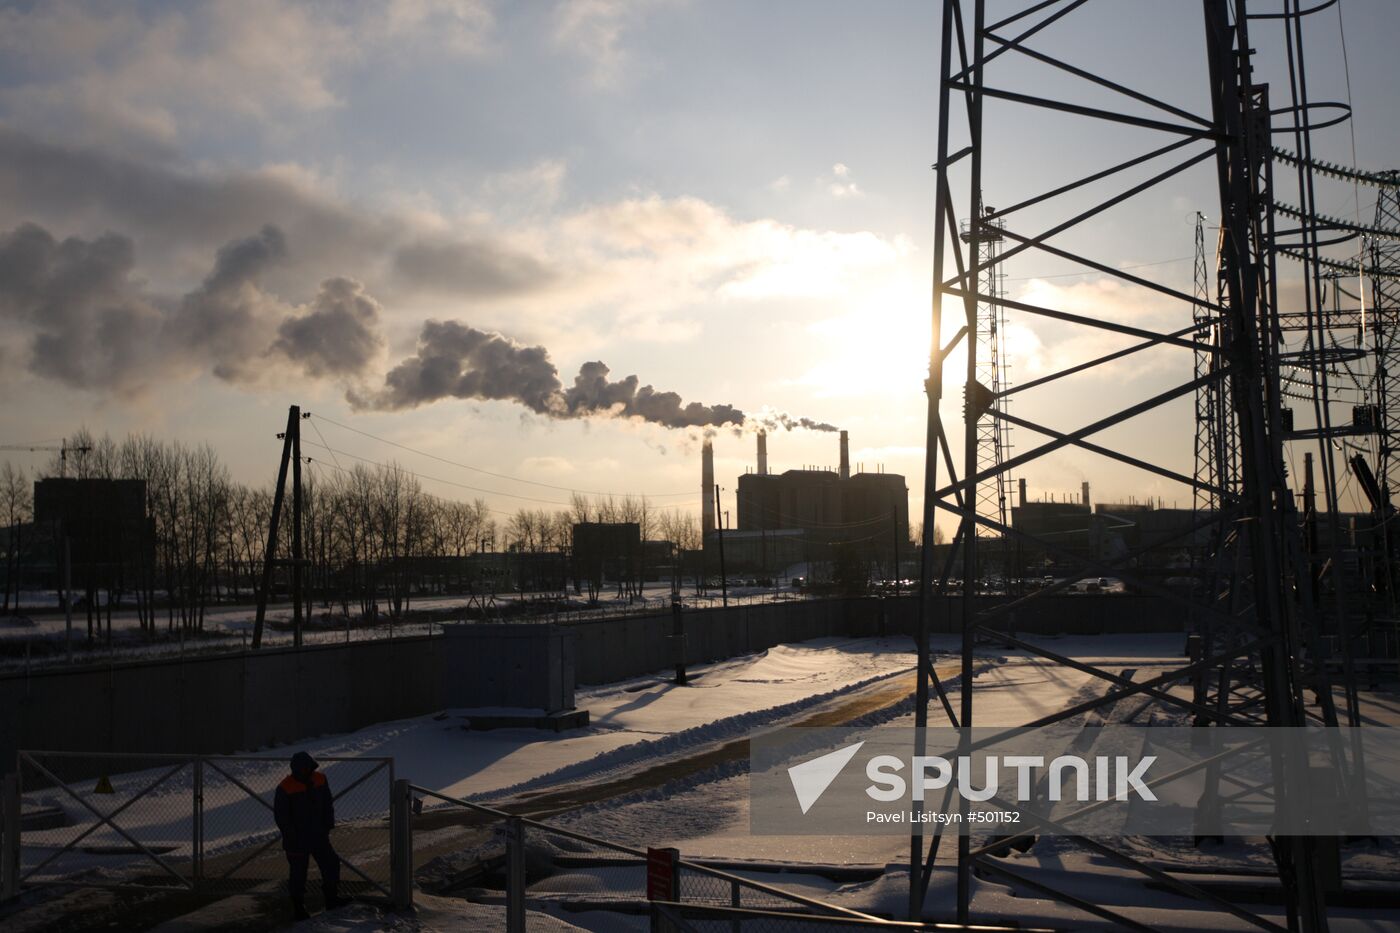 New electric power substation commissioned in Sverdlovsk Region